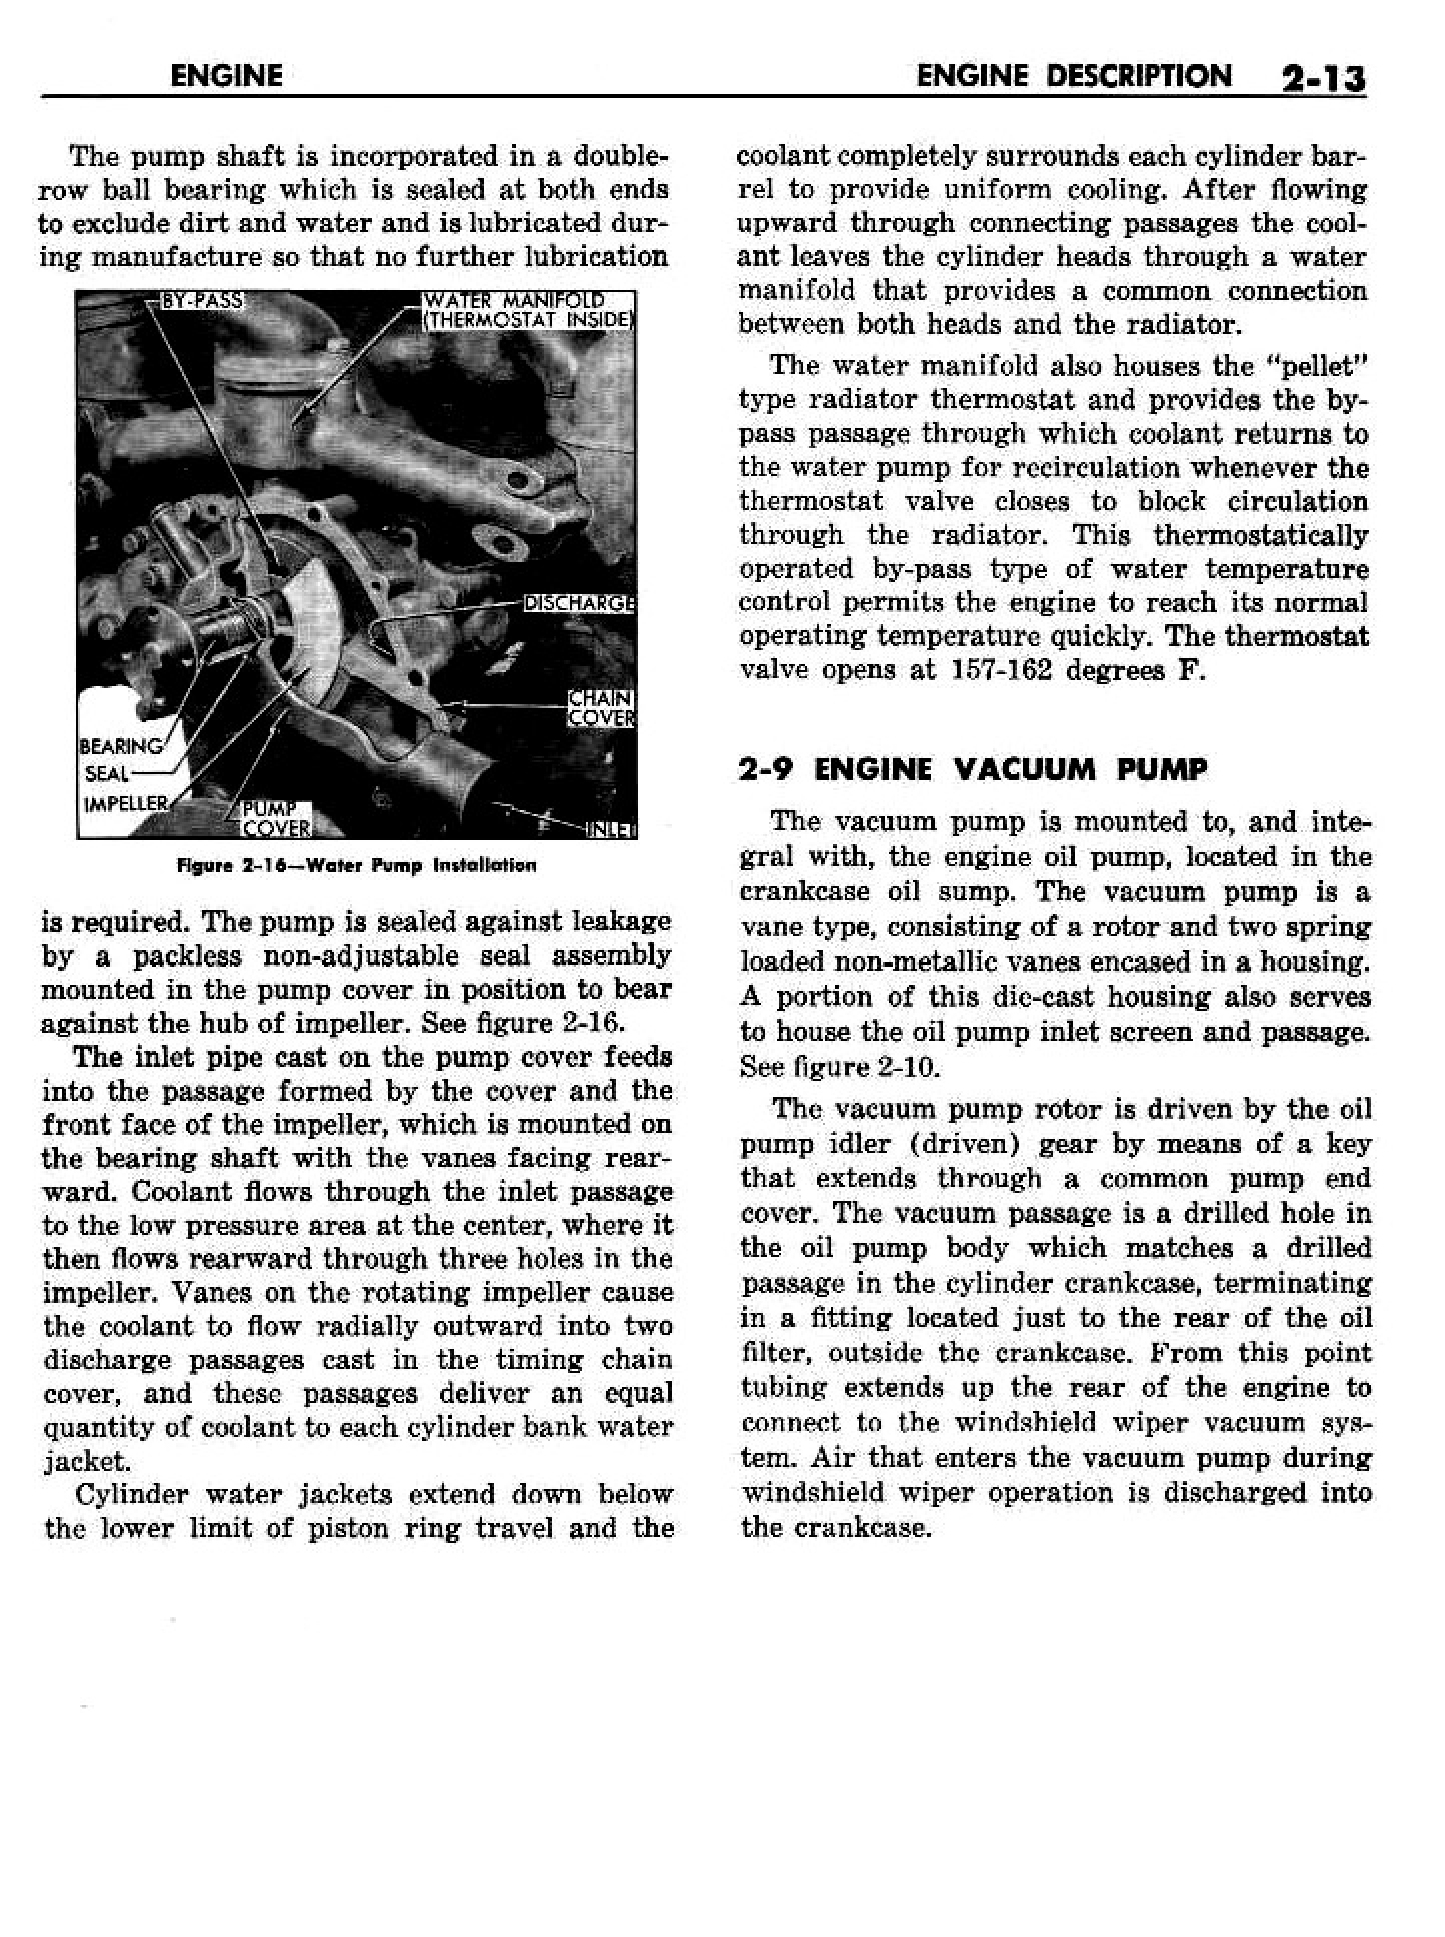 n_03 1958 Buick Shop Manual - Engine_13.jpg